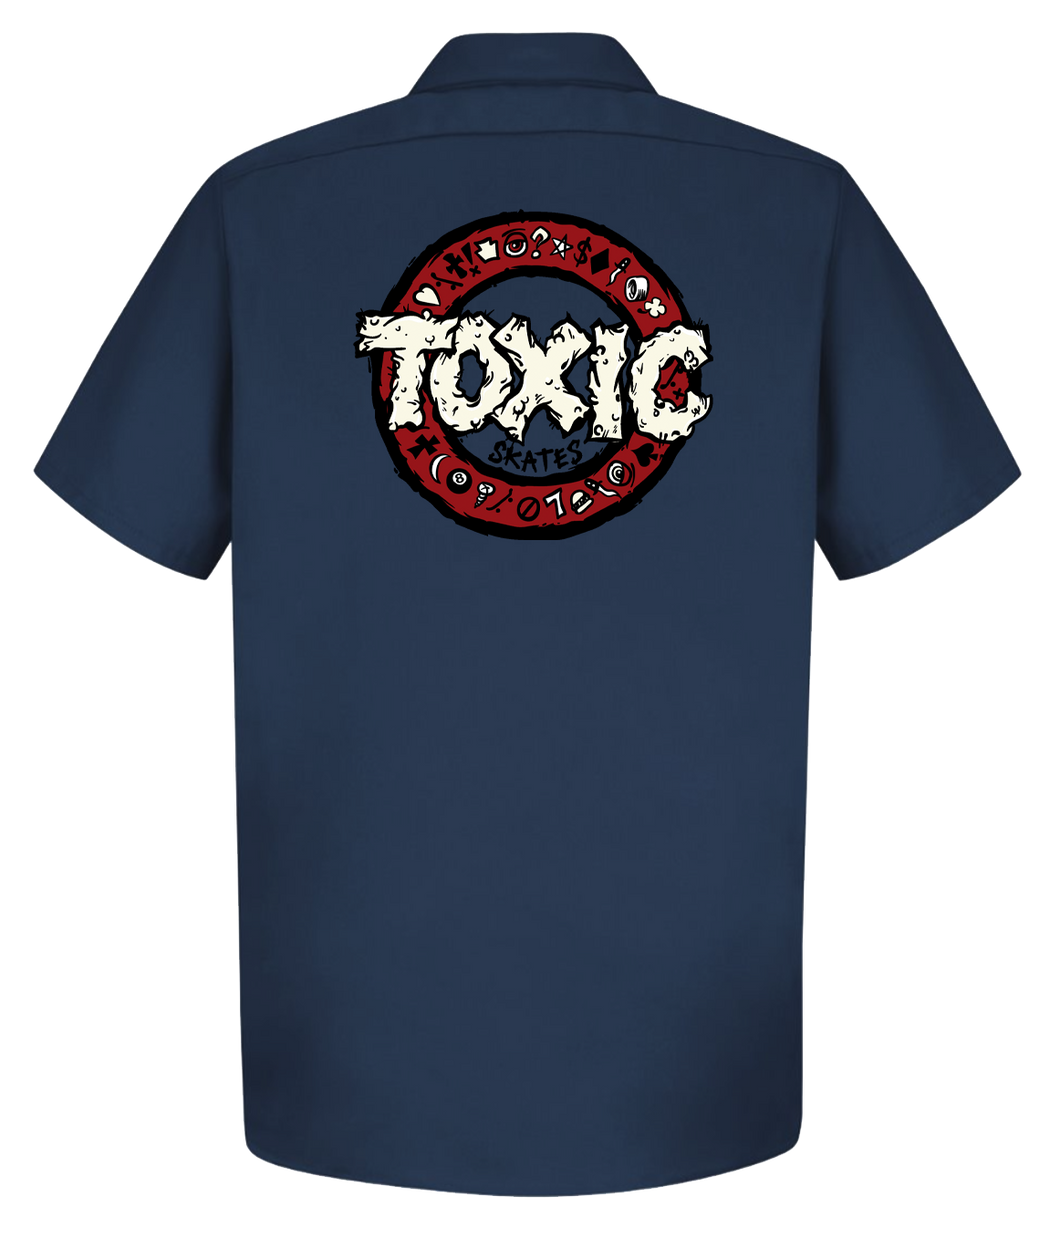 Toxic Team Work Shirt